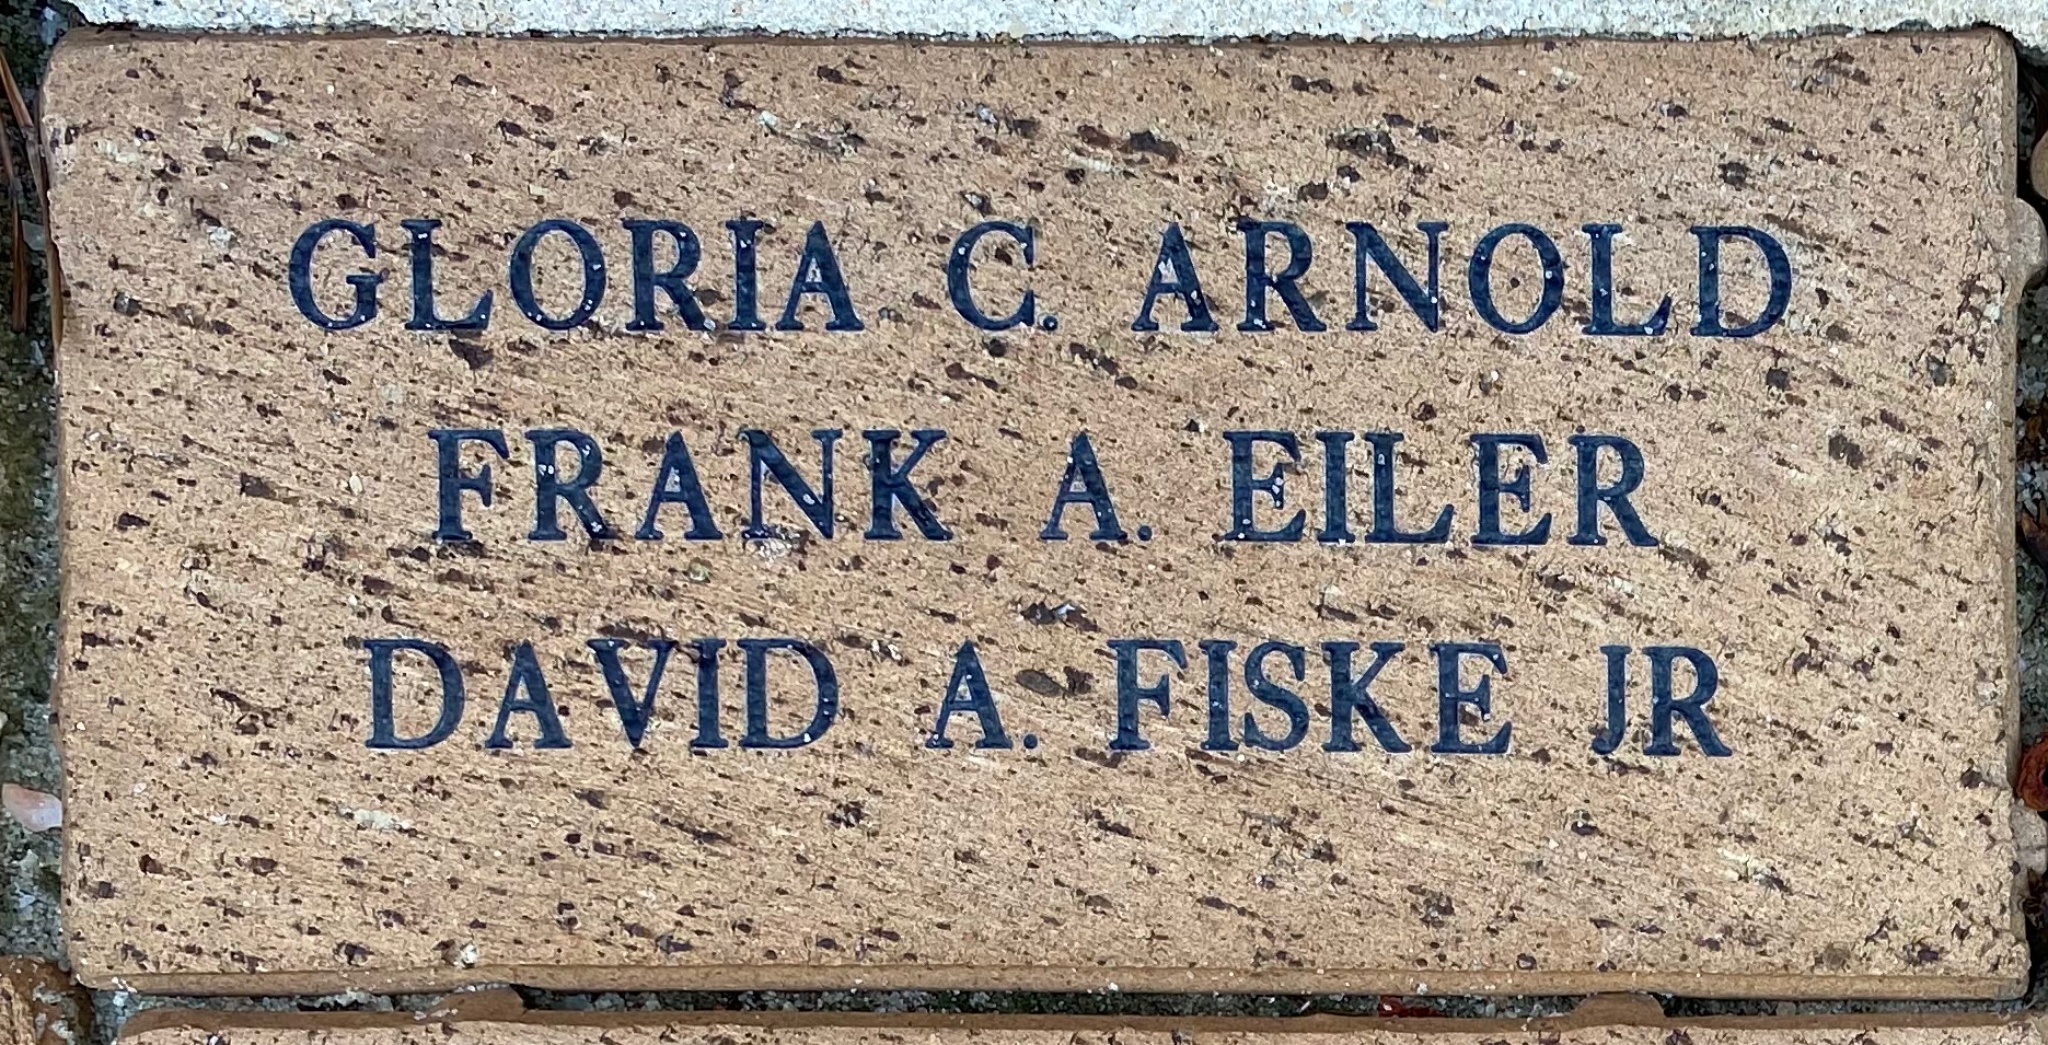 GLORIA C. ARNOLD FRANK A. EILER DAVID A. FISKE JR